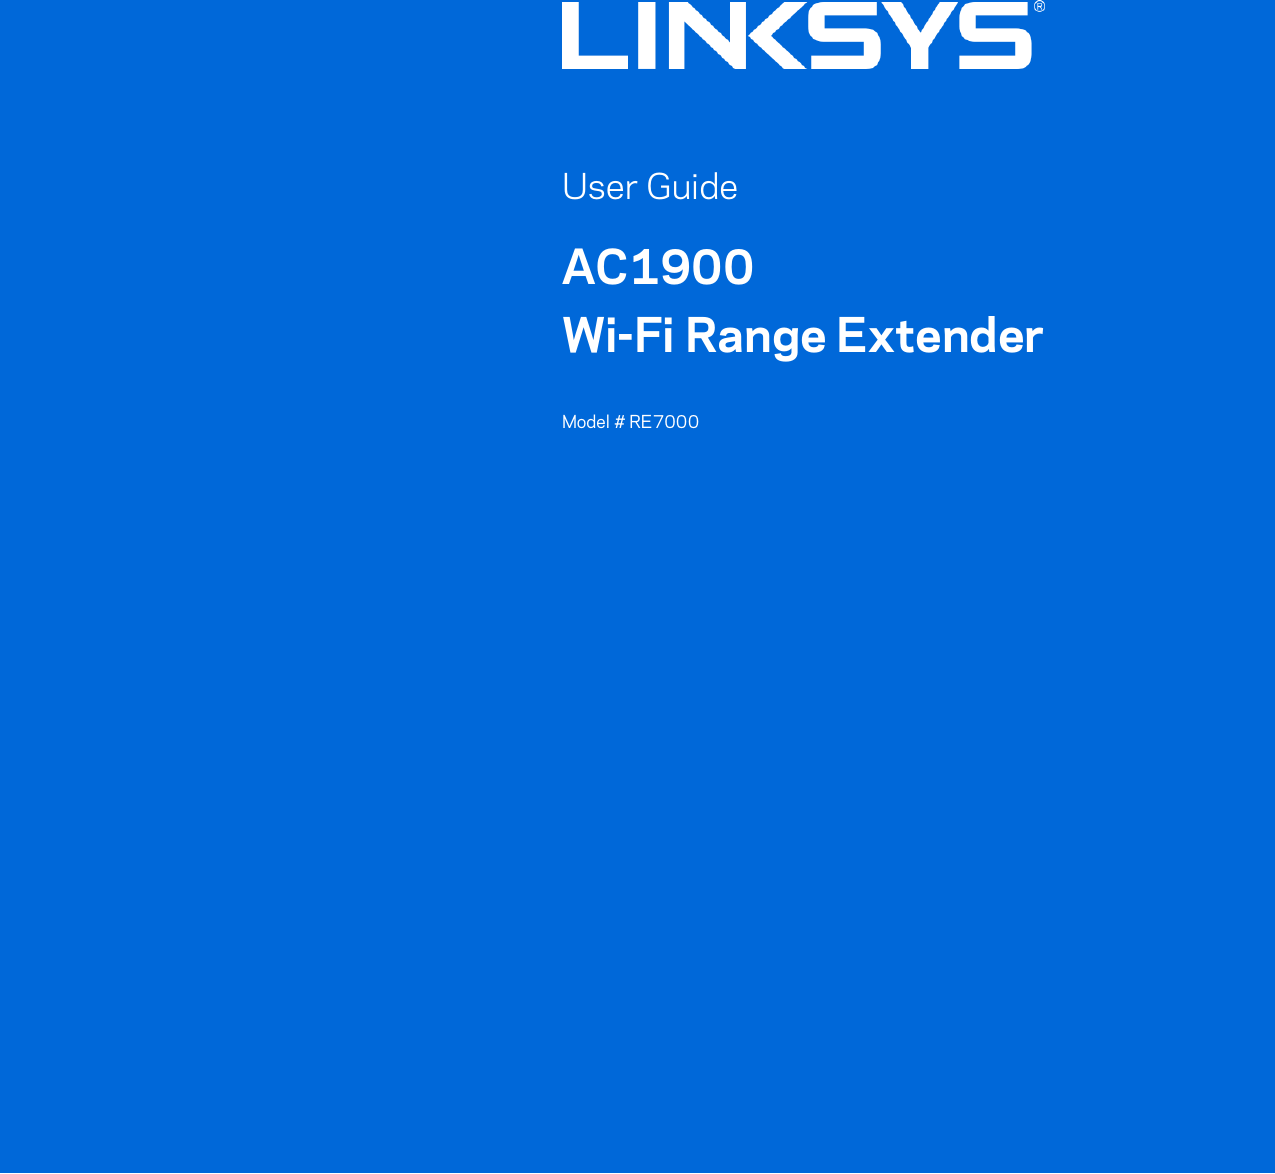             User Guide AC1900  Wi-Fi Range Extender  Model # RE7000   1  